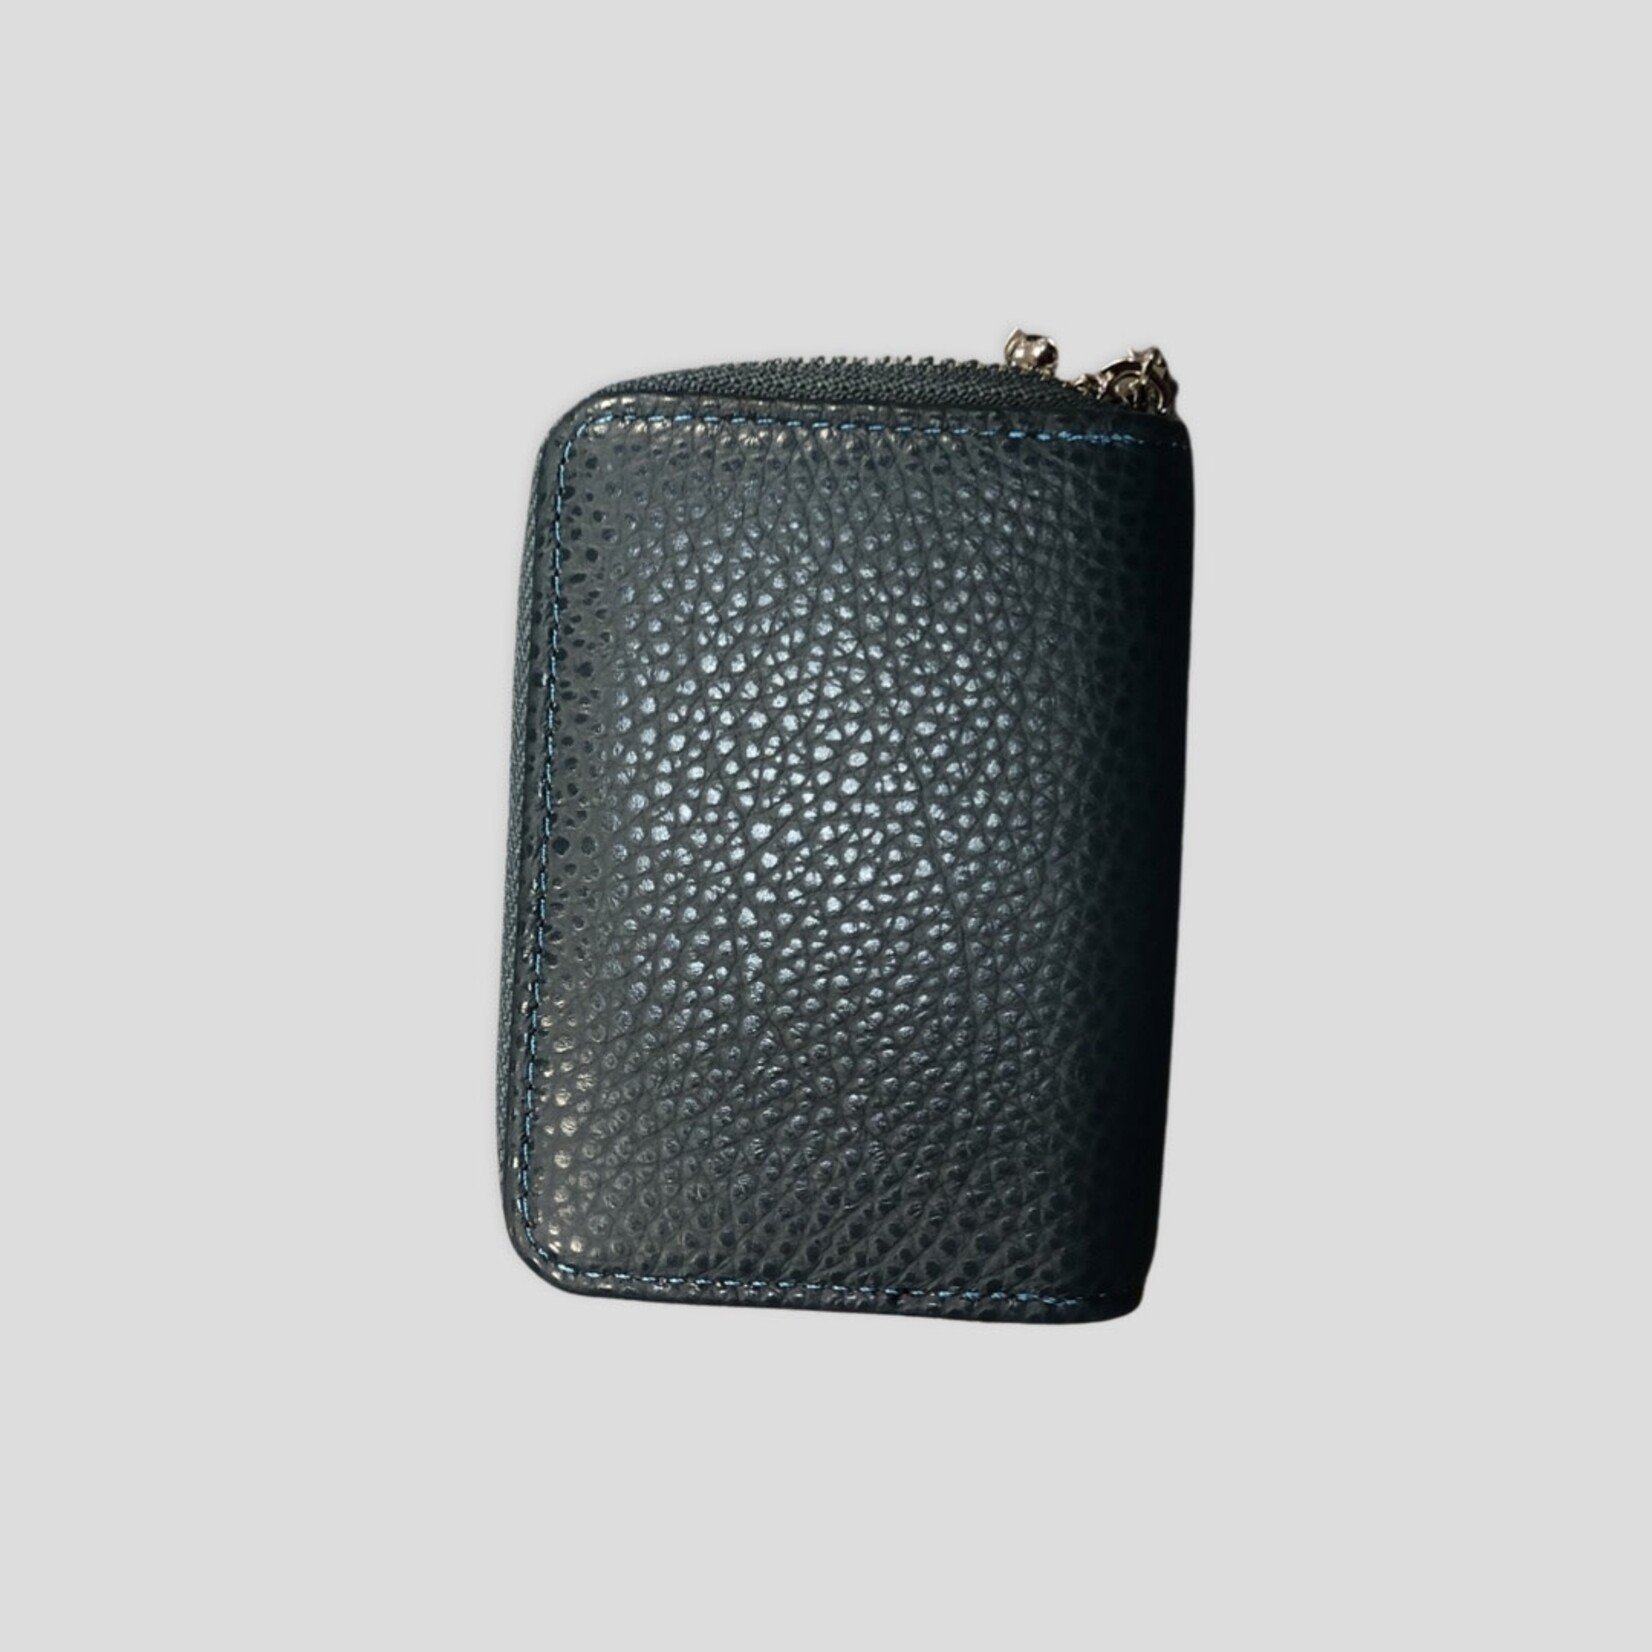 Zeneeba Teal Blue Leather Card Holder Wallet